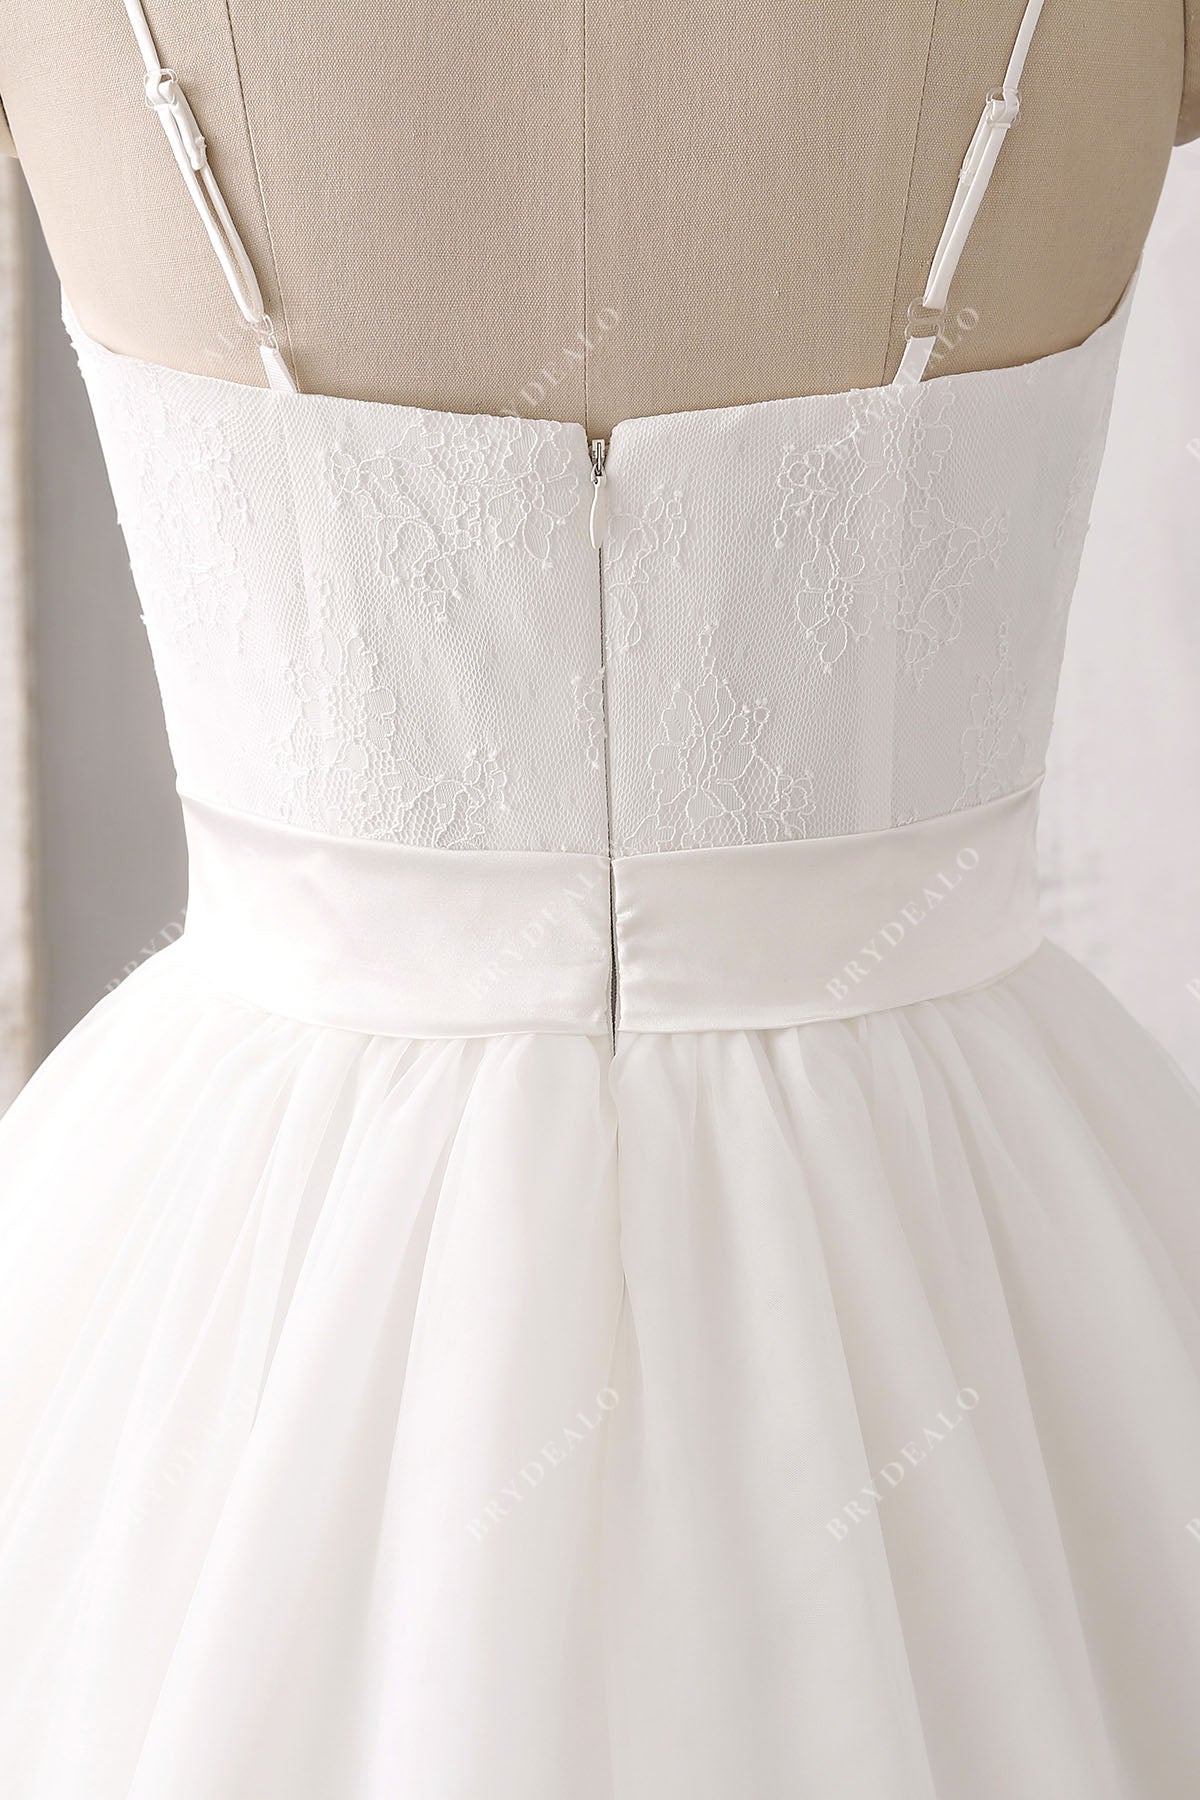 spaghetti straps strapless lace wedding dress